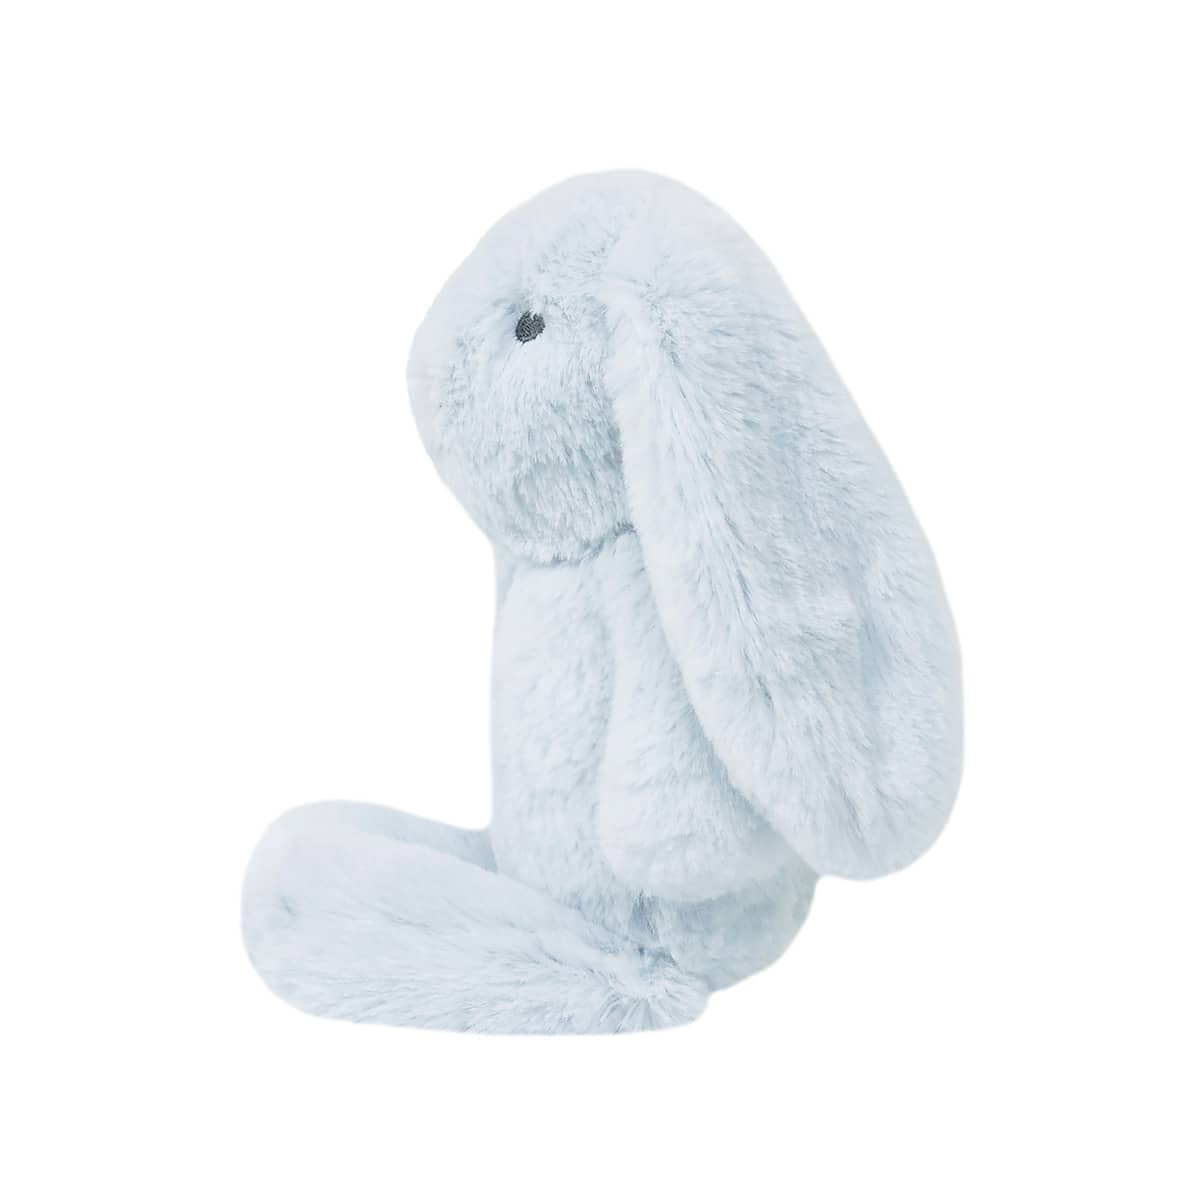 OB Designs Little Baxter Bunny Plush Toy